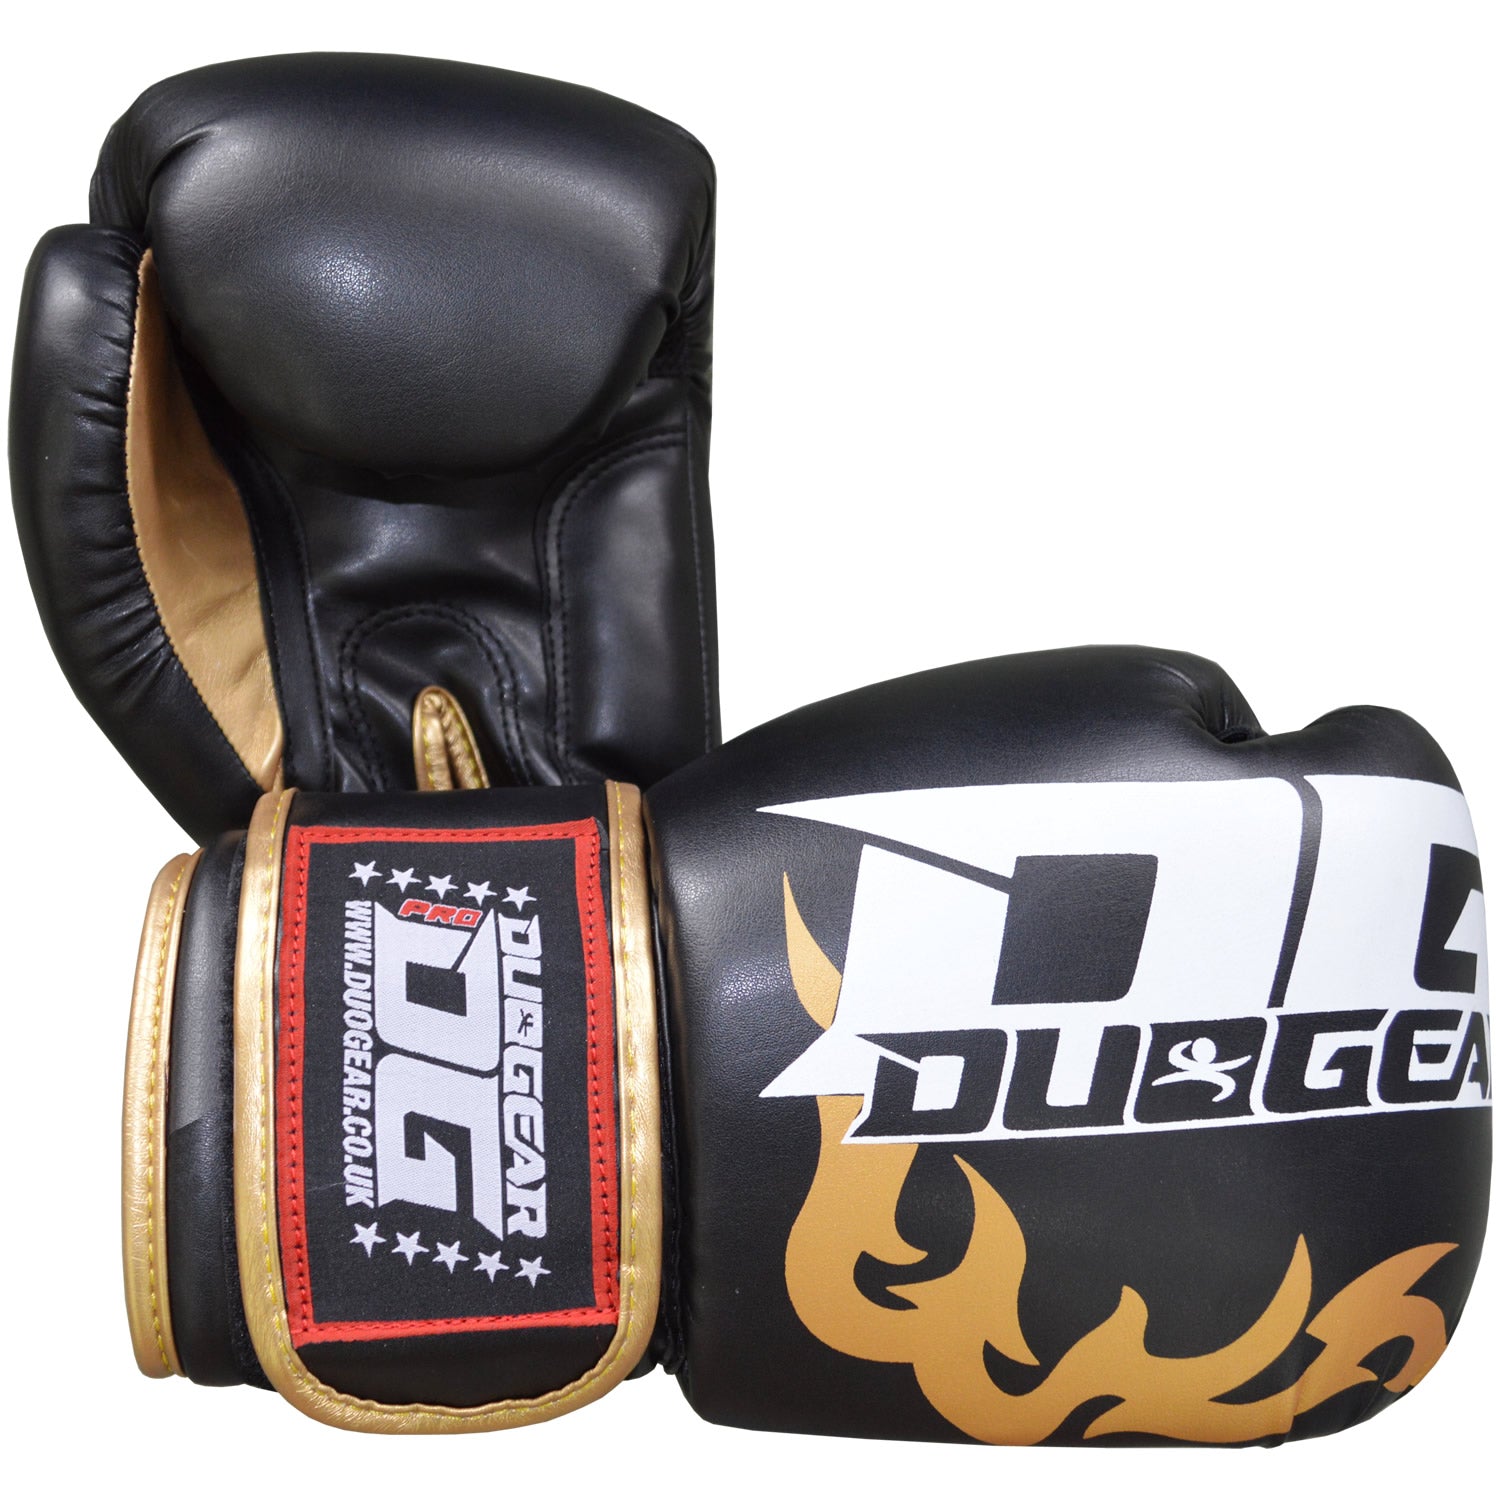 DUO GEAR | Boxing Gloves | BLACK 'DG2018' MUAY THAI BOXING GLOVES